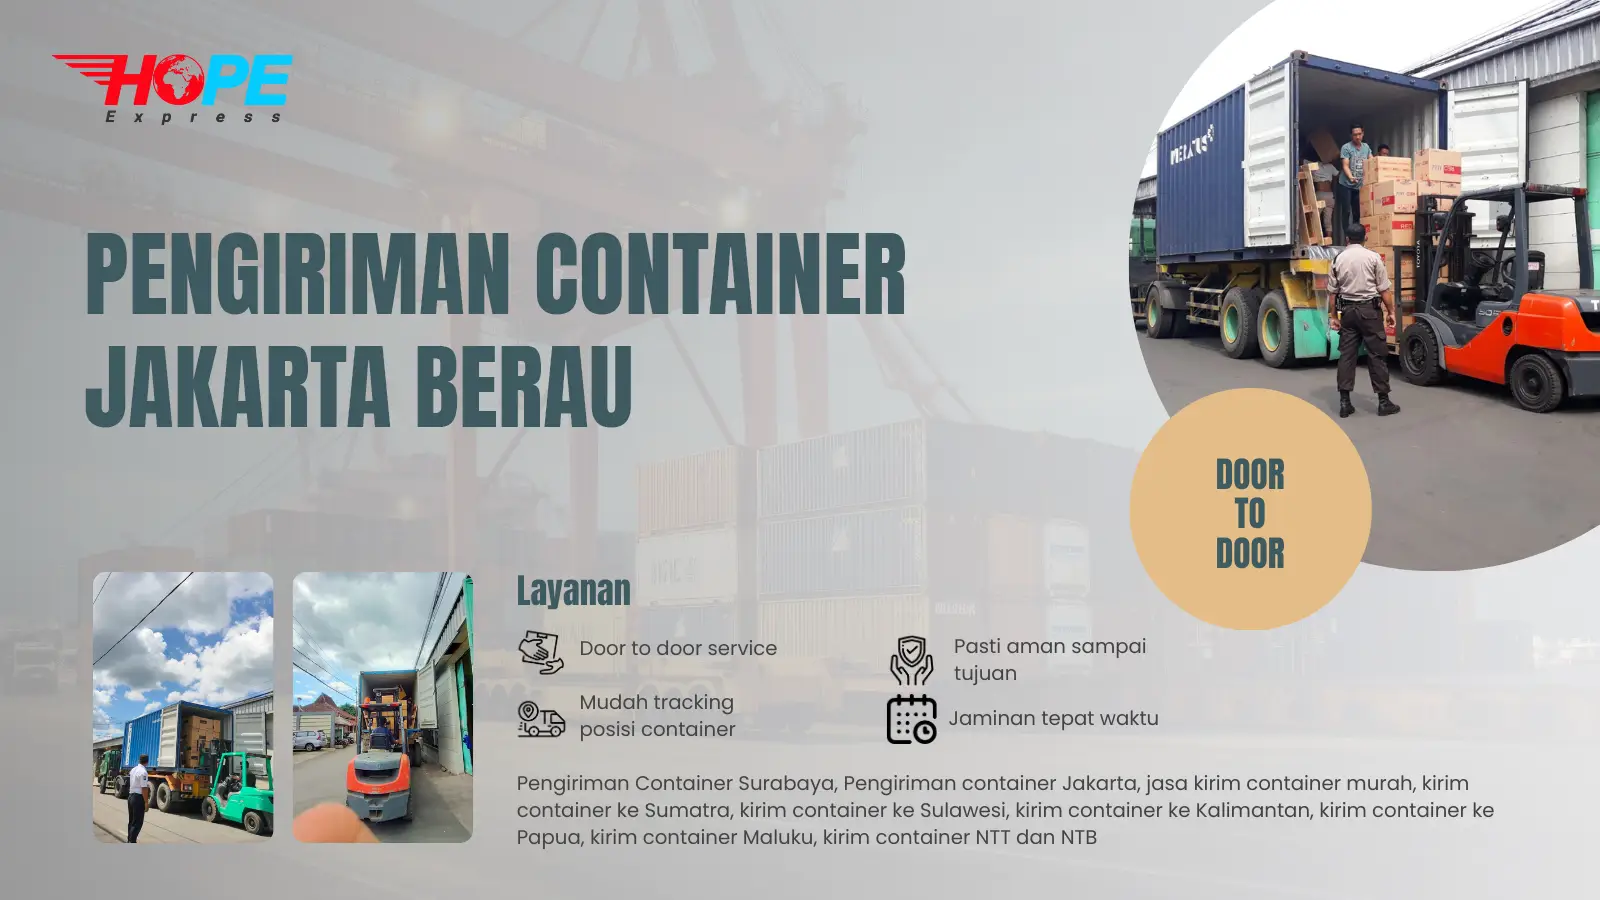 Pengiriman Container Jakarta Berau